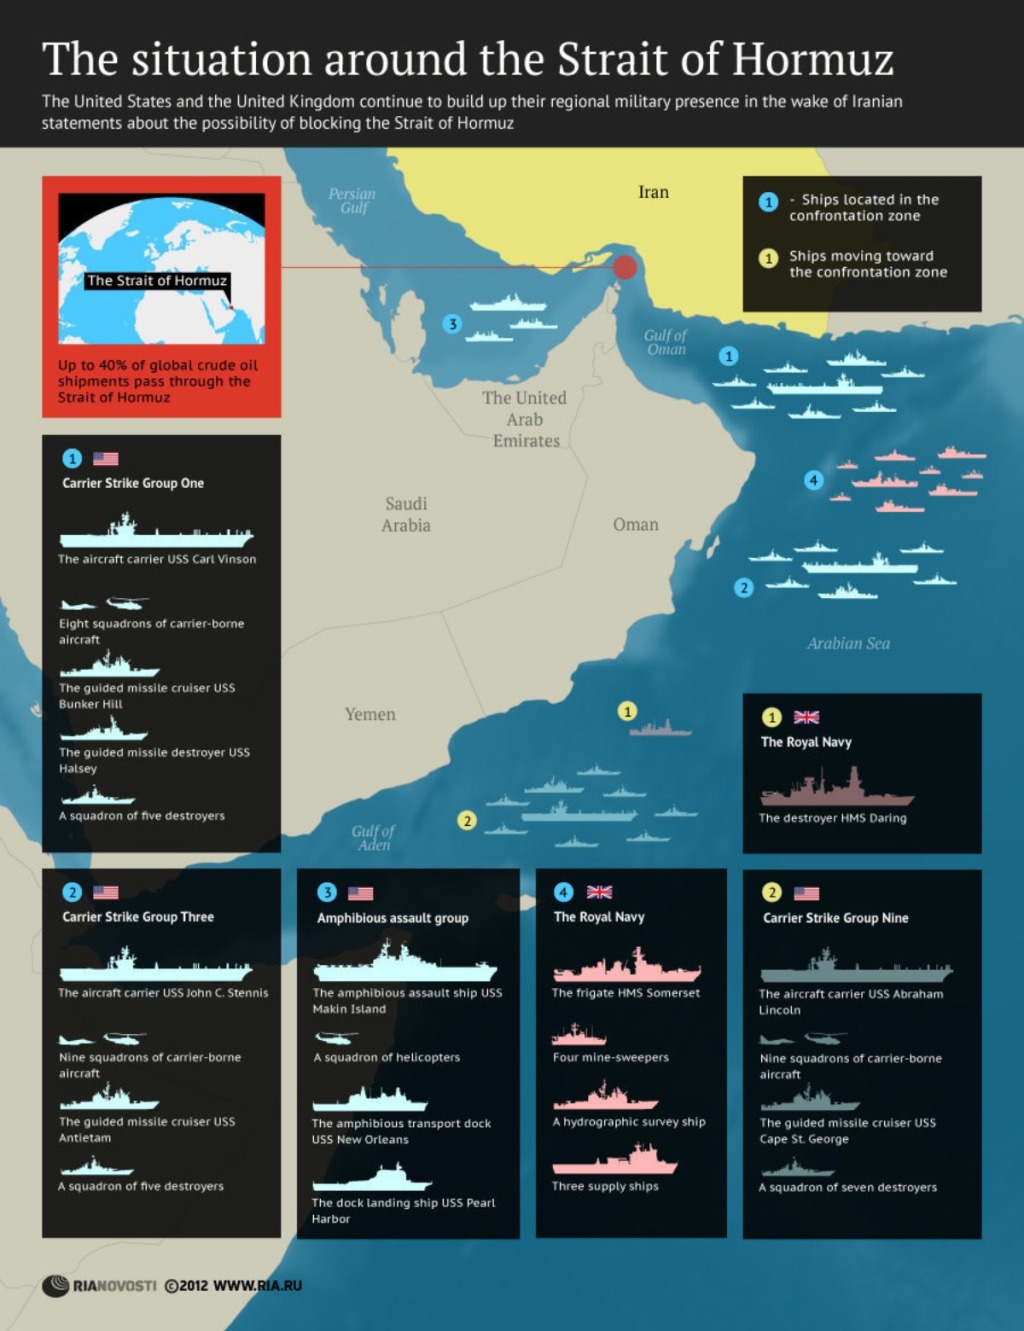 RIA-Novosti Infographics. The Situation Around the Strait of Hormuz. 2012